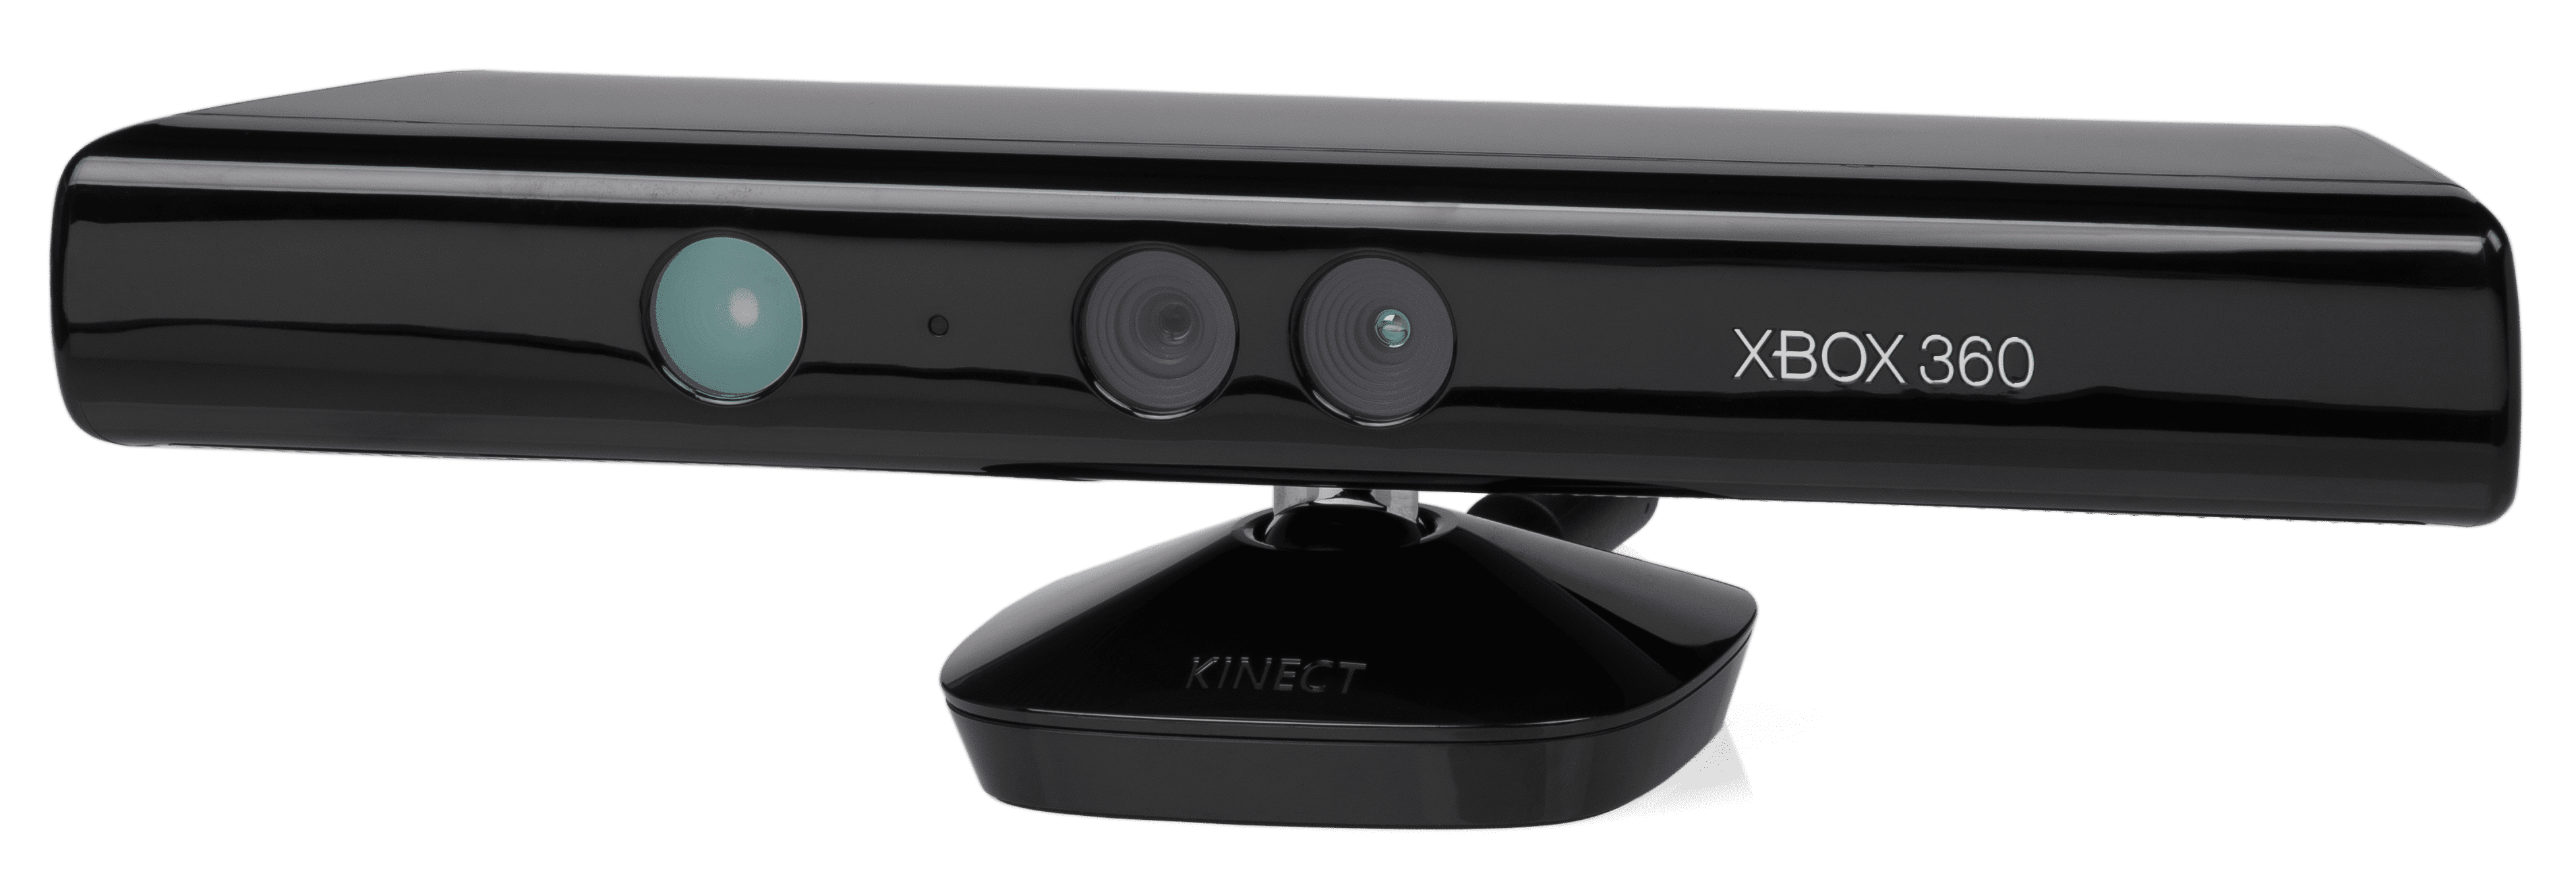 Sensor kinect xbox 360 - Valentes Games